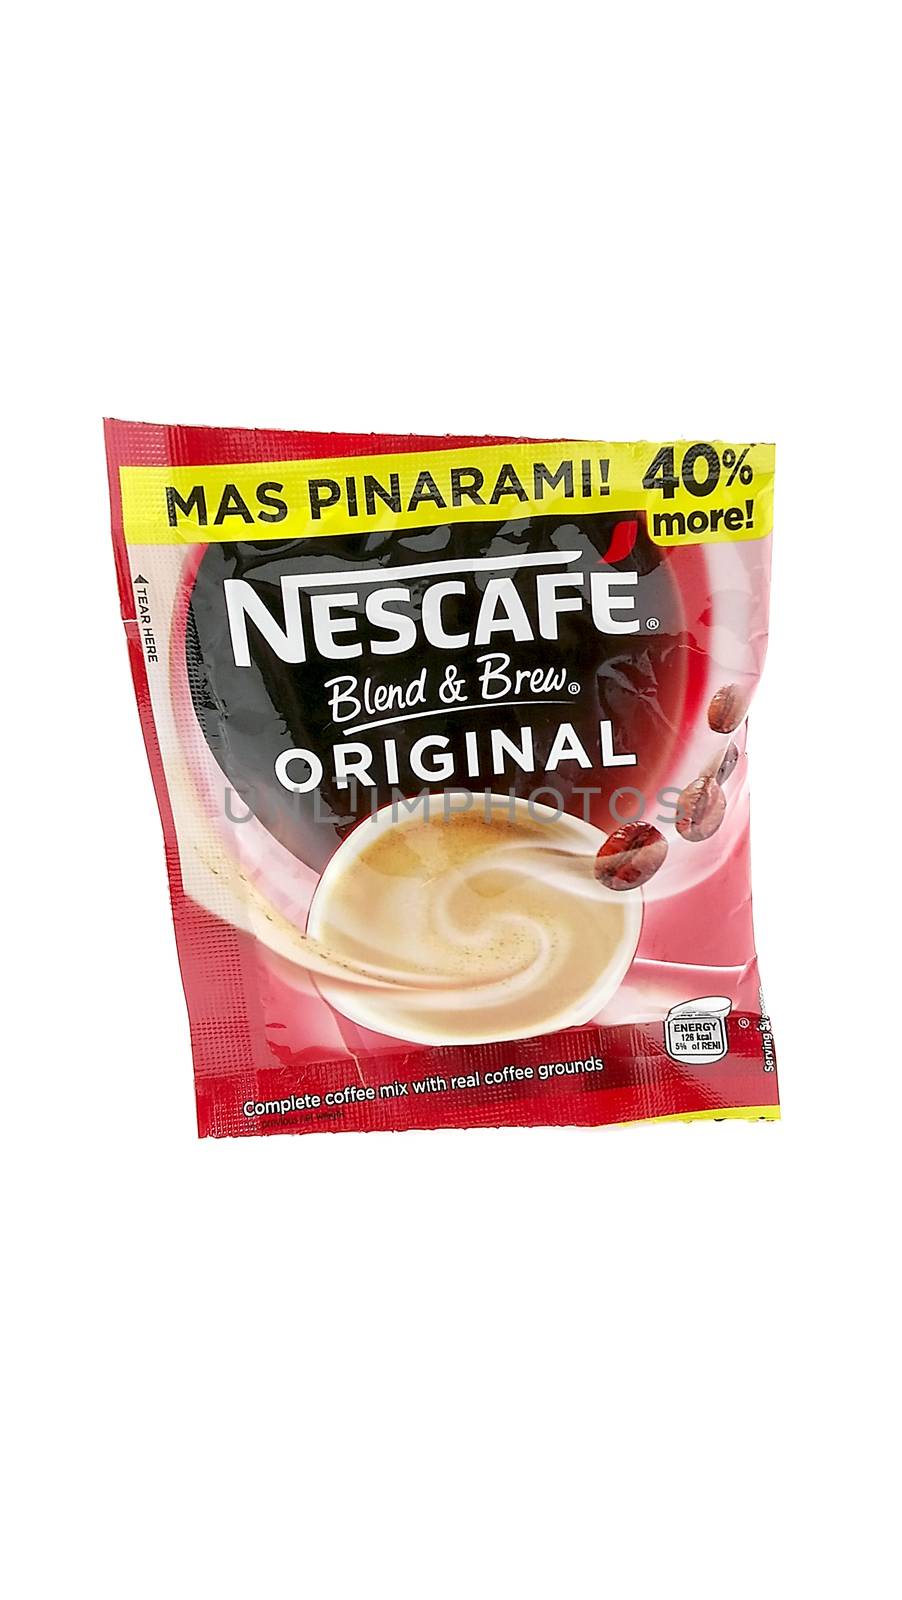 MANILA, PH - JUNE 23 - Nescafe blend and brew original coffee sachet on June 23, 2020 in Manila, Philippines.